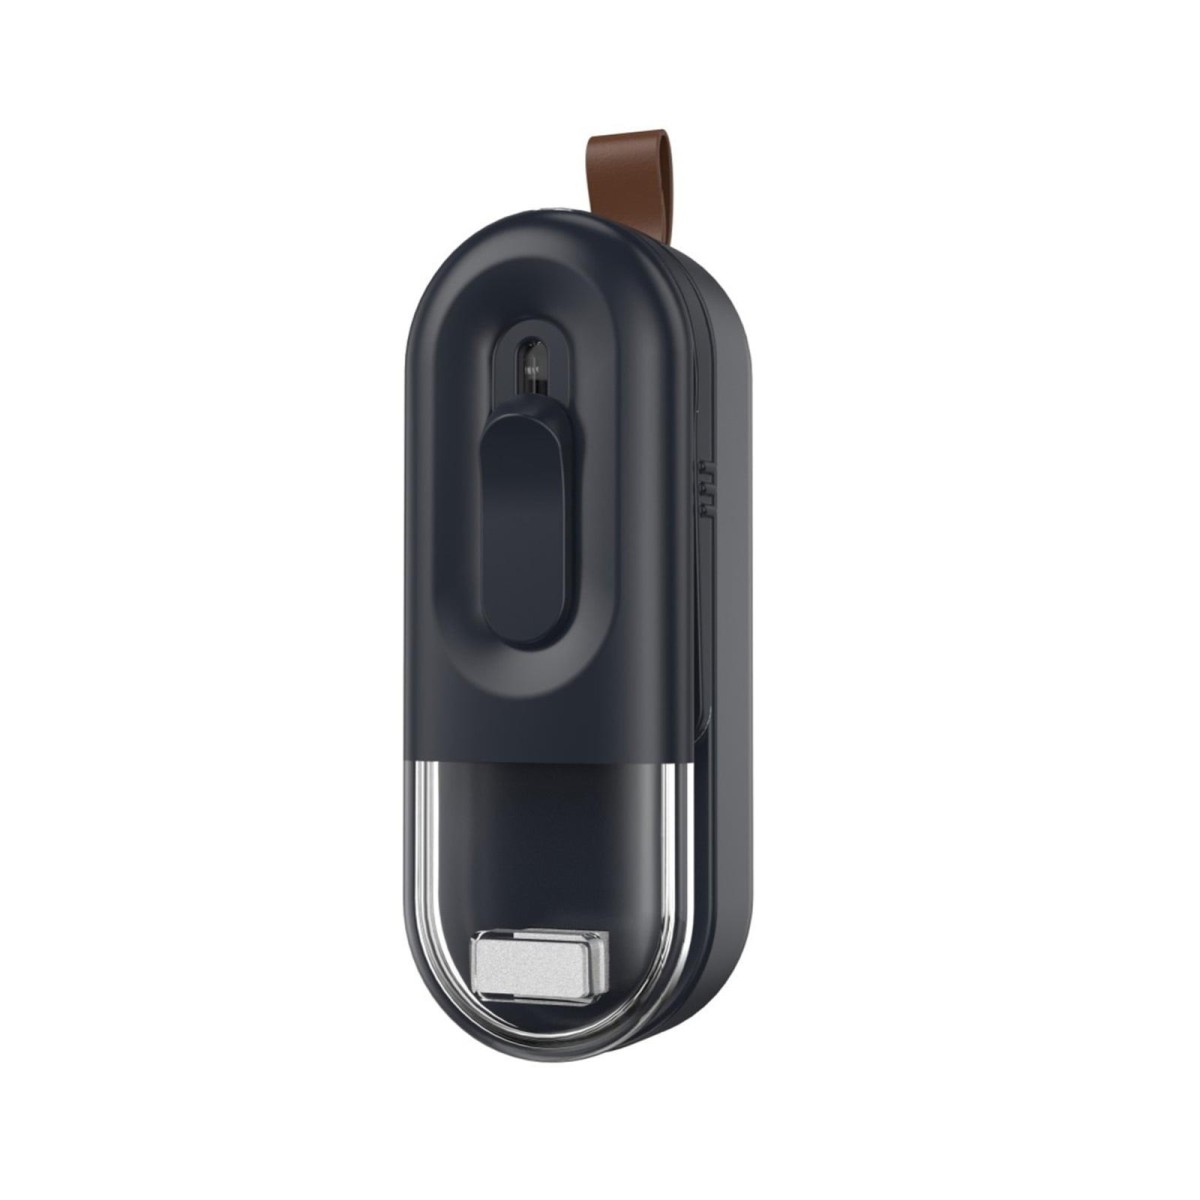 Food Packaging Sealer 2 In 1 Magnetic Mini Handheld Vacuum Sealer Machine With Cutter(Black)